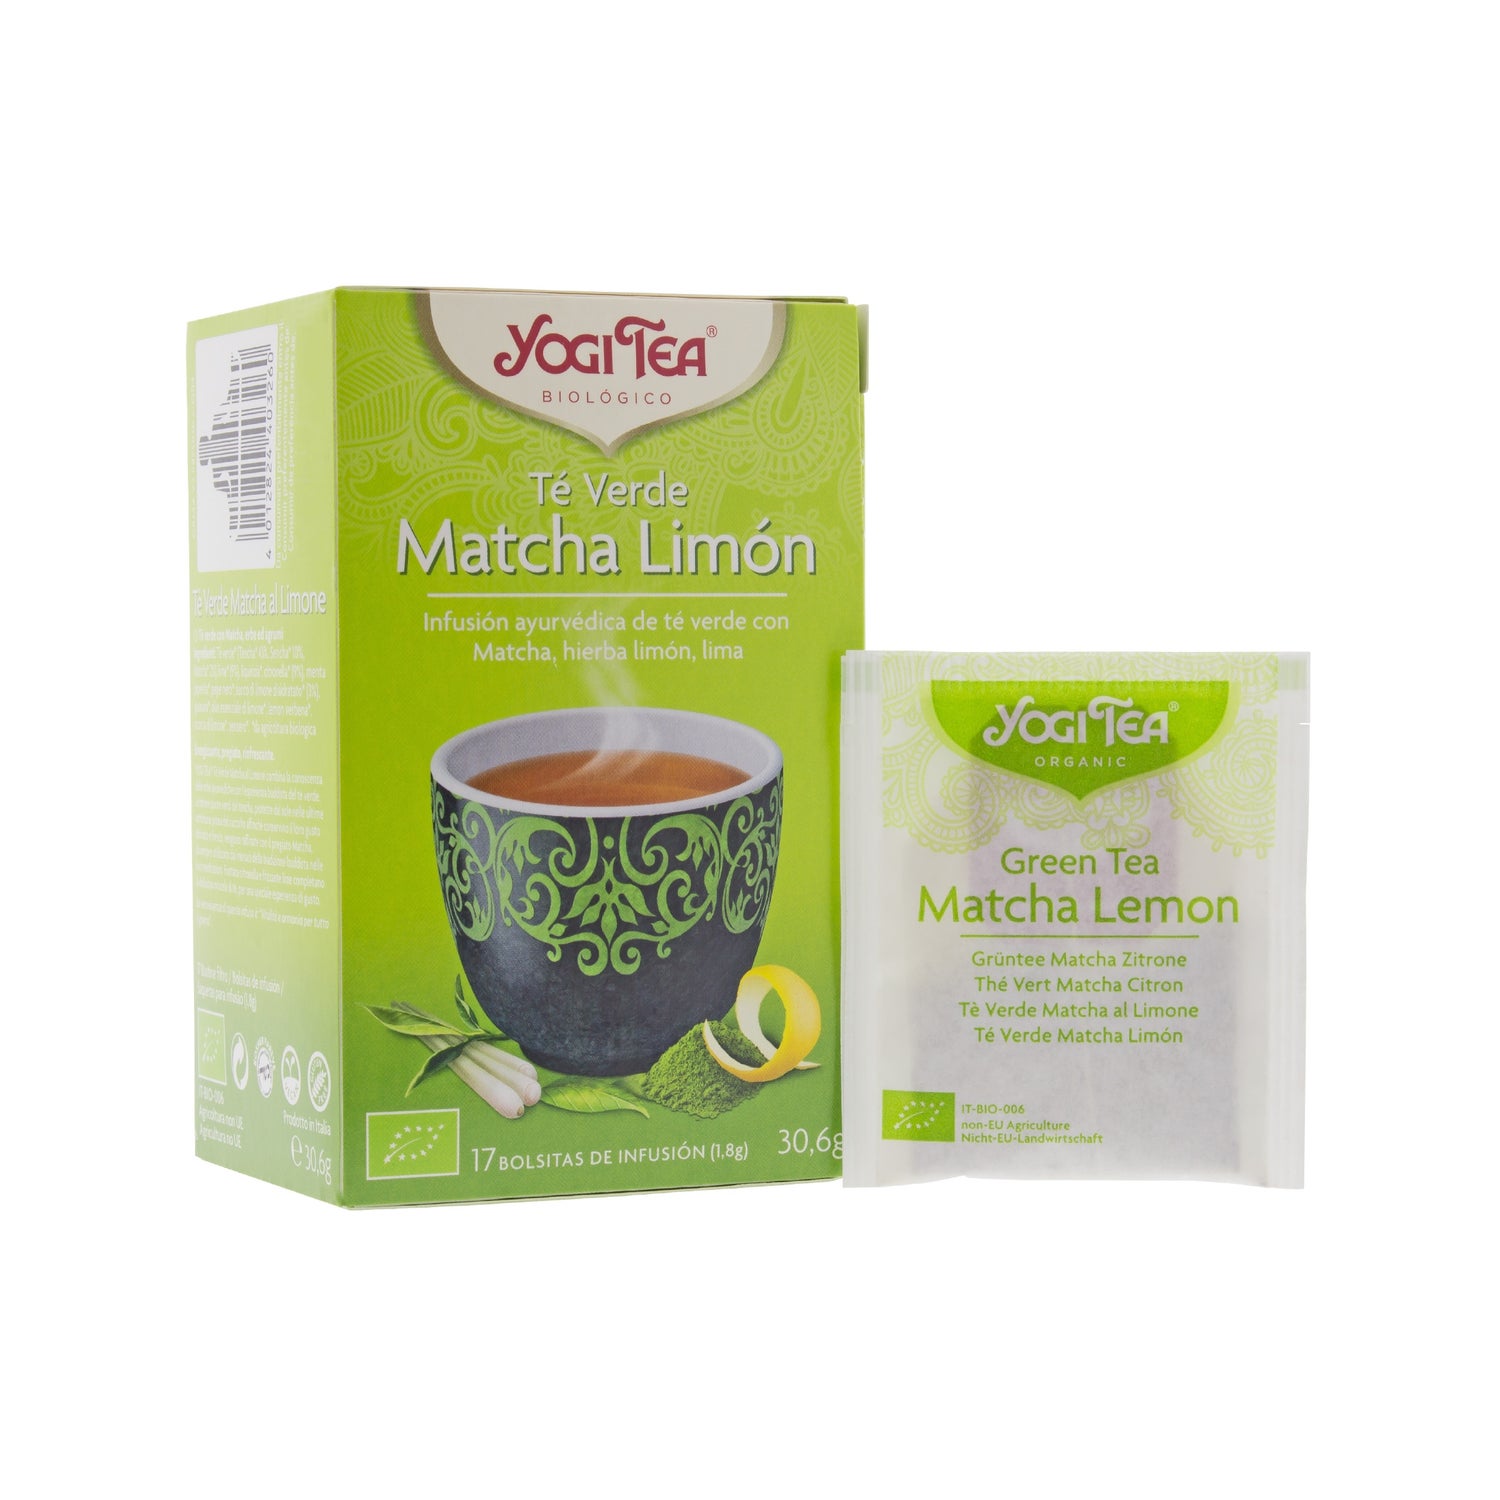 Yogi Tea Detox Organic Tea Bags 17 per pack